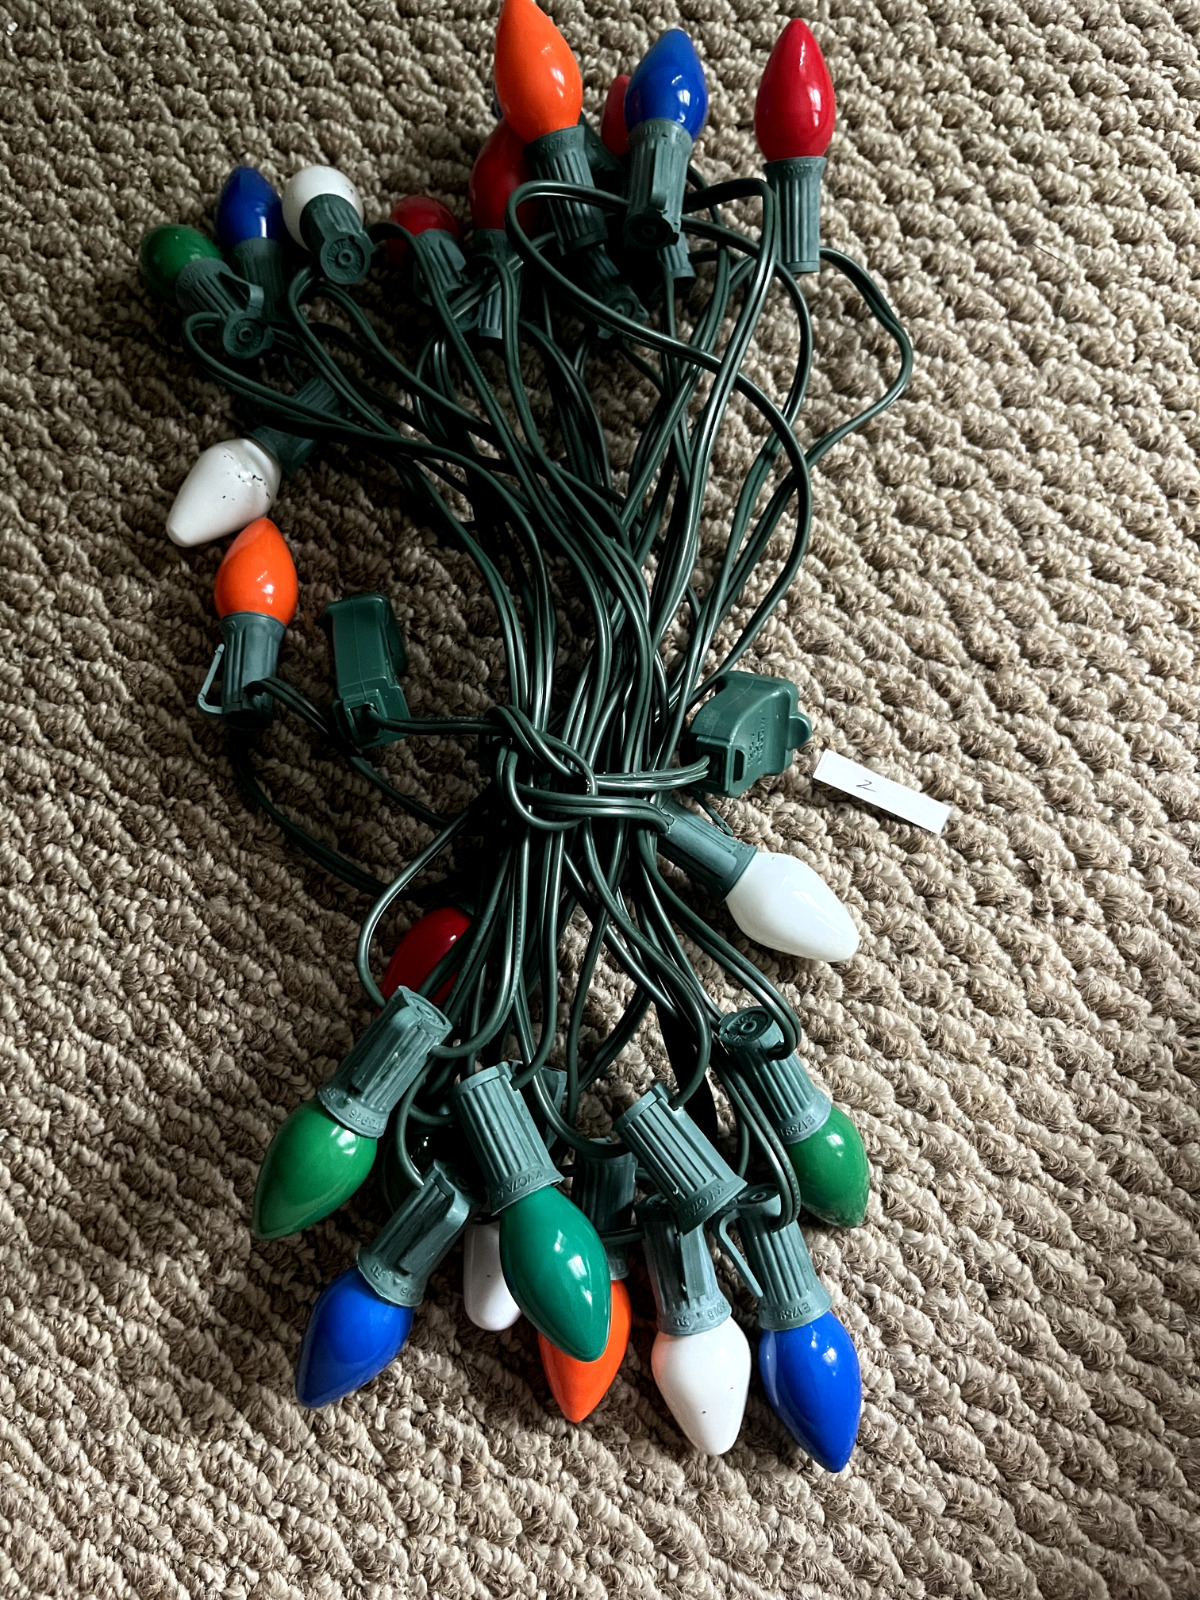 Vintage C7 Christmas Light String - 25 Socket Lights w/ bulbs  Green Cord